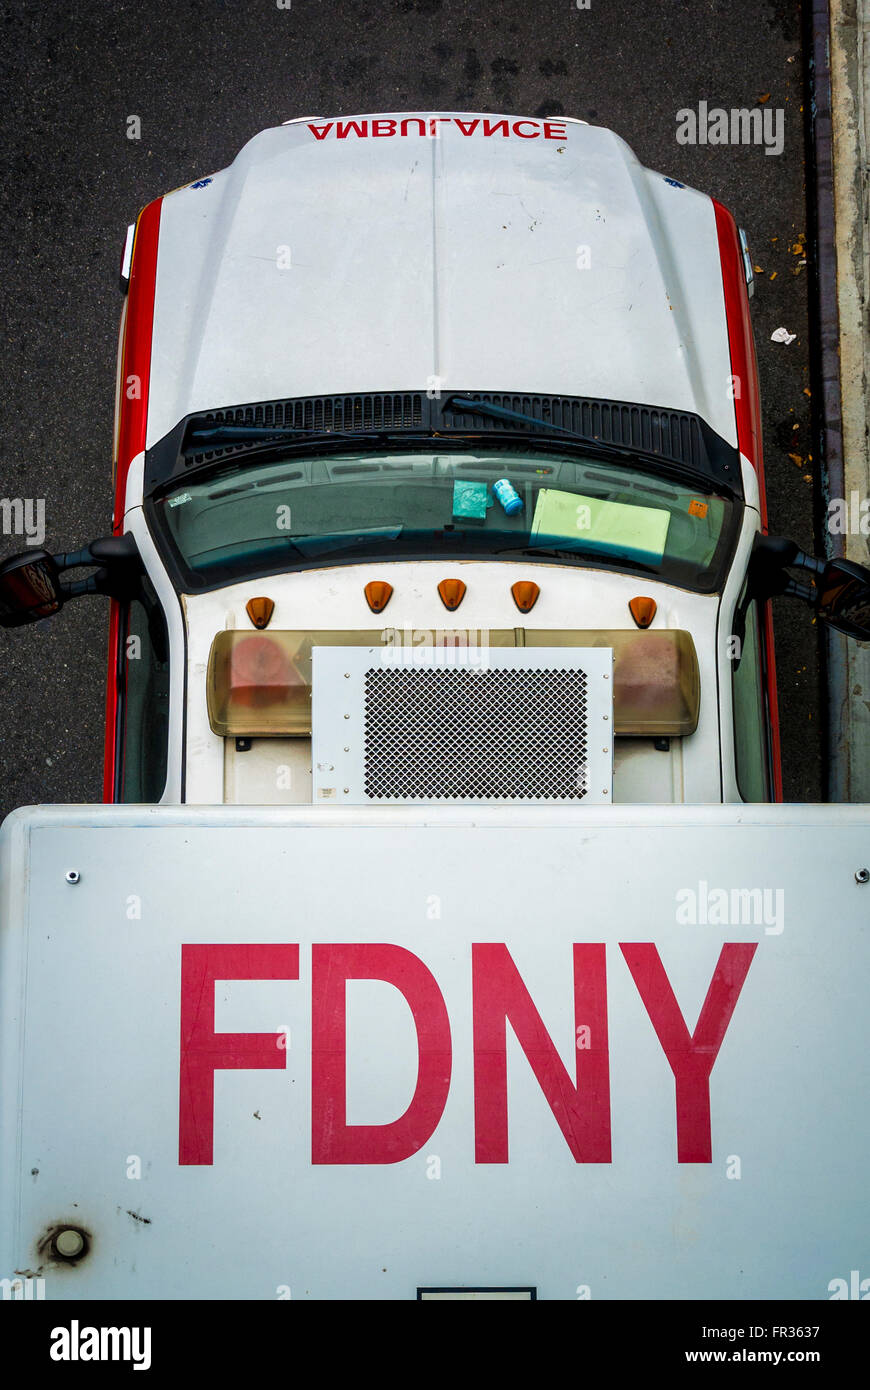 FDNY Ambulance vehicle seen from above, New York City, USA. Stock Photo